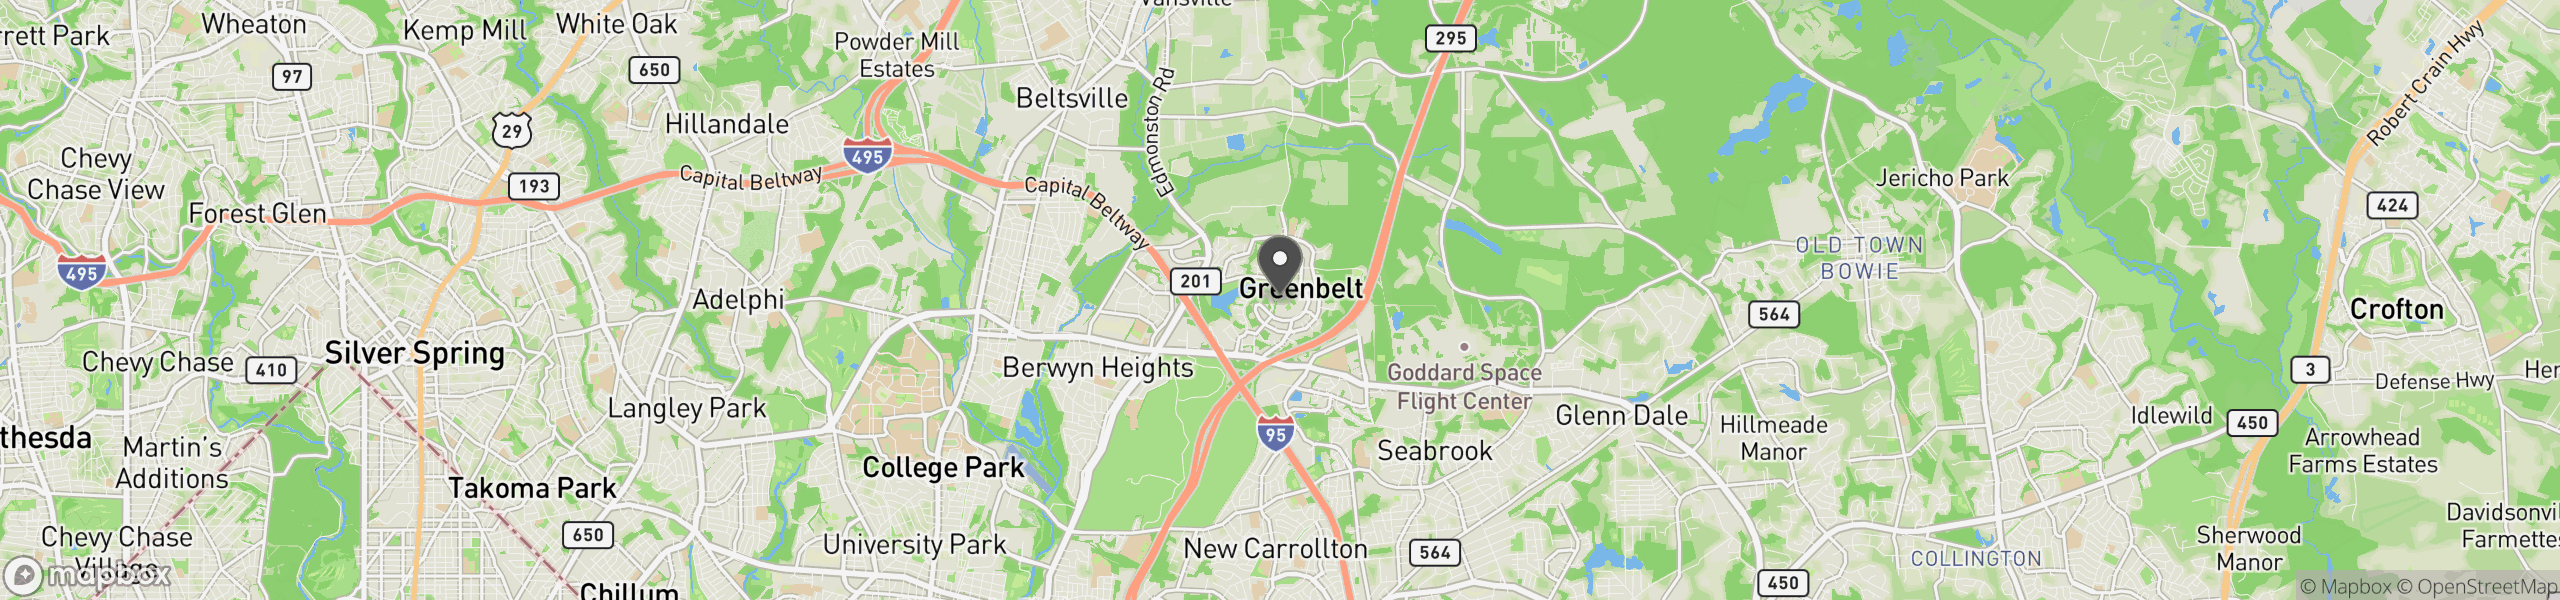 Greenbelt, MD 20770